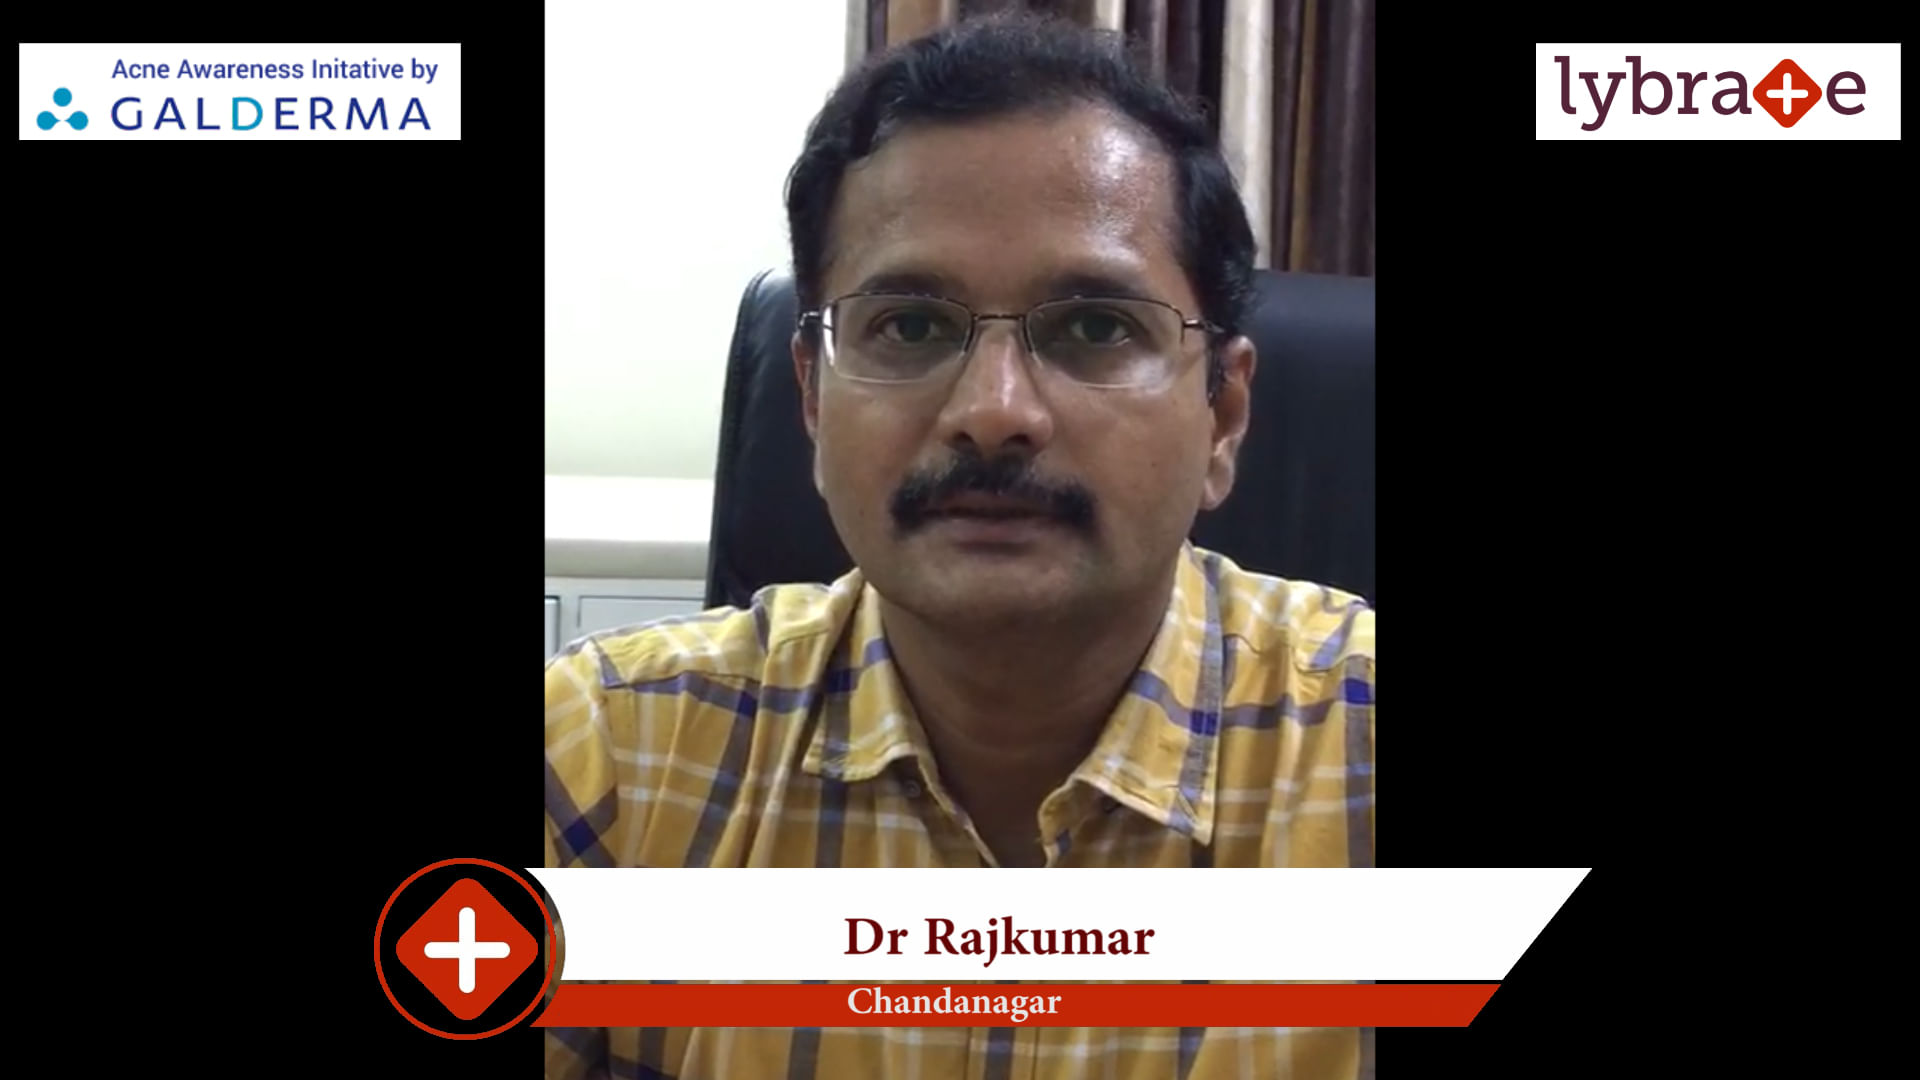 Lybrate | Dr. Rajkumar speaks on IMPORTANCE OF TREATING ACNE EARLY